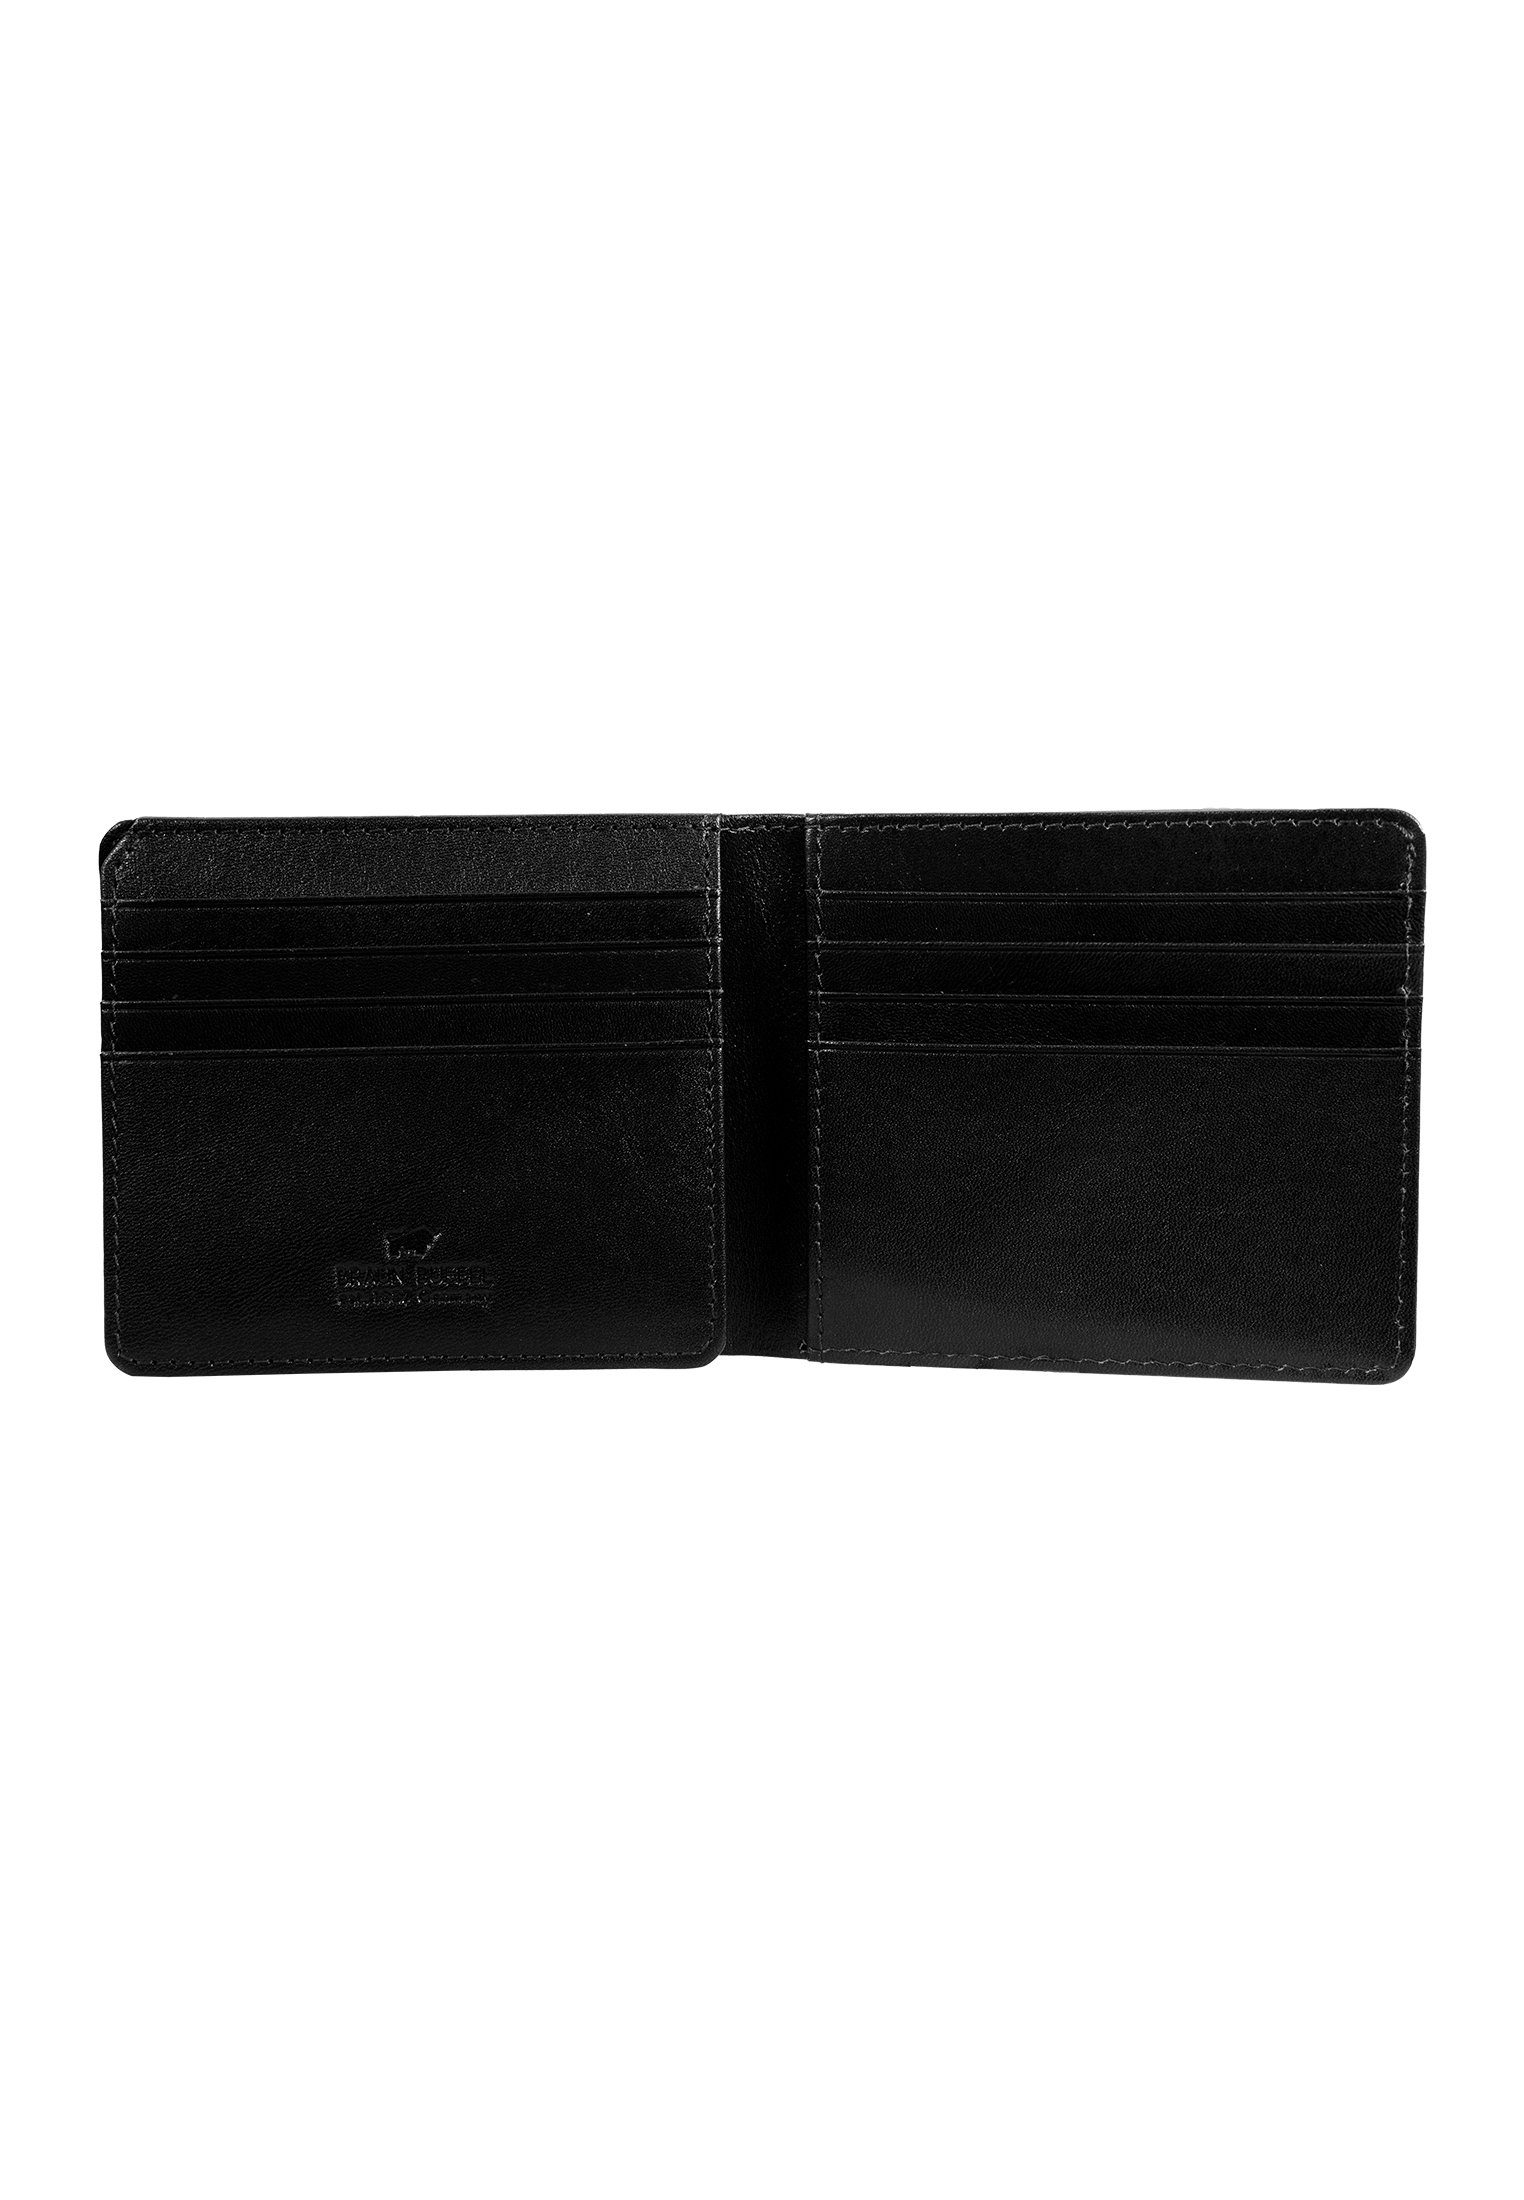 Braun Büffel Geldbörse COUNTRY 12CS, schwarz im Slim-Format Kartenbörse RFID